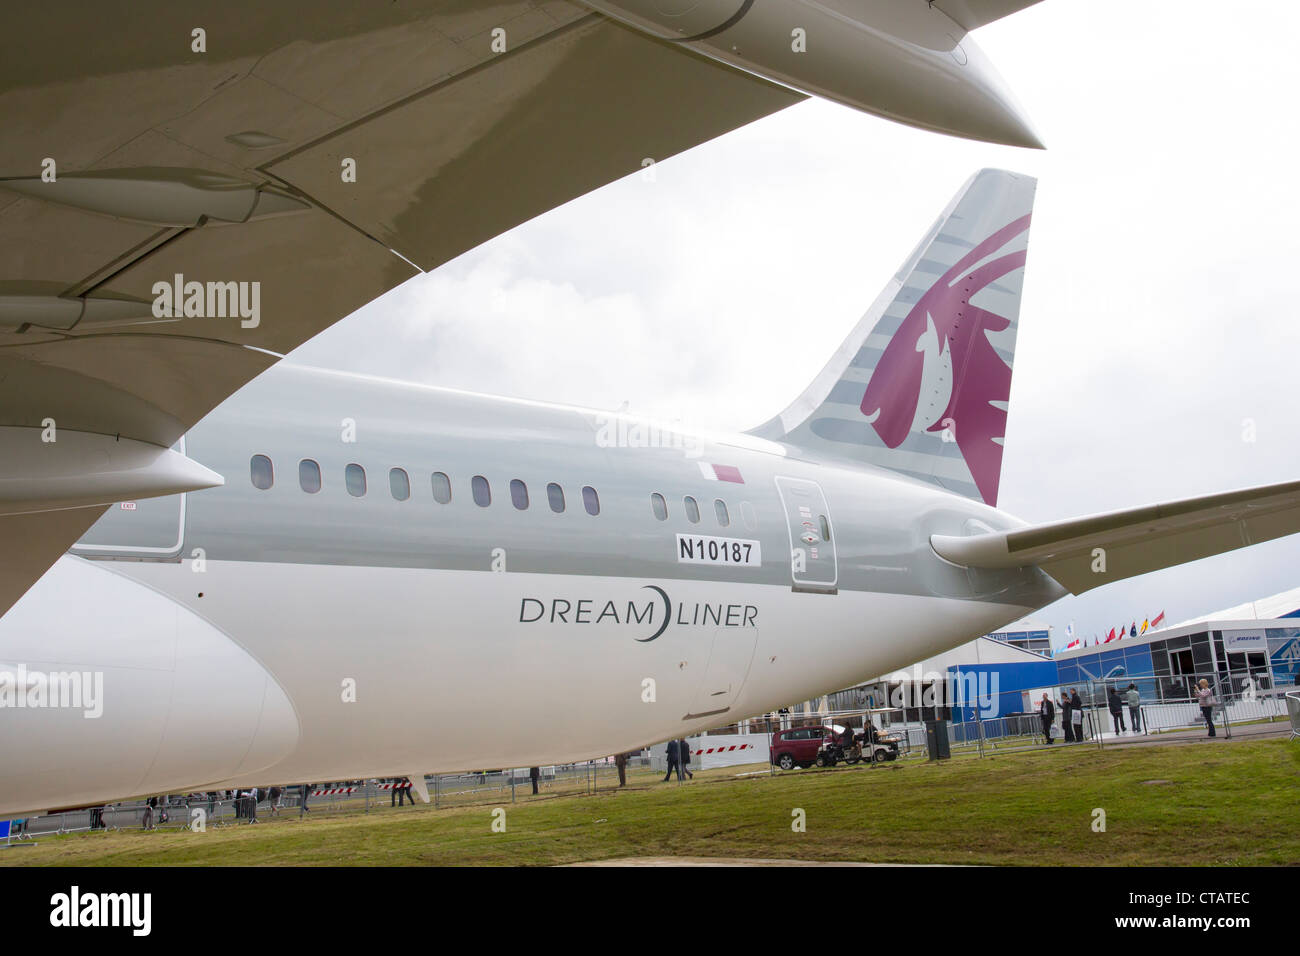 Farnborough International Airshow 2012.  The First Boeing 787 Dreamliner for Qatar airways. Stock Photo